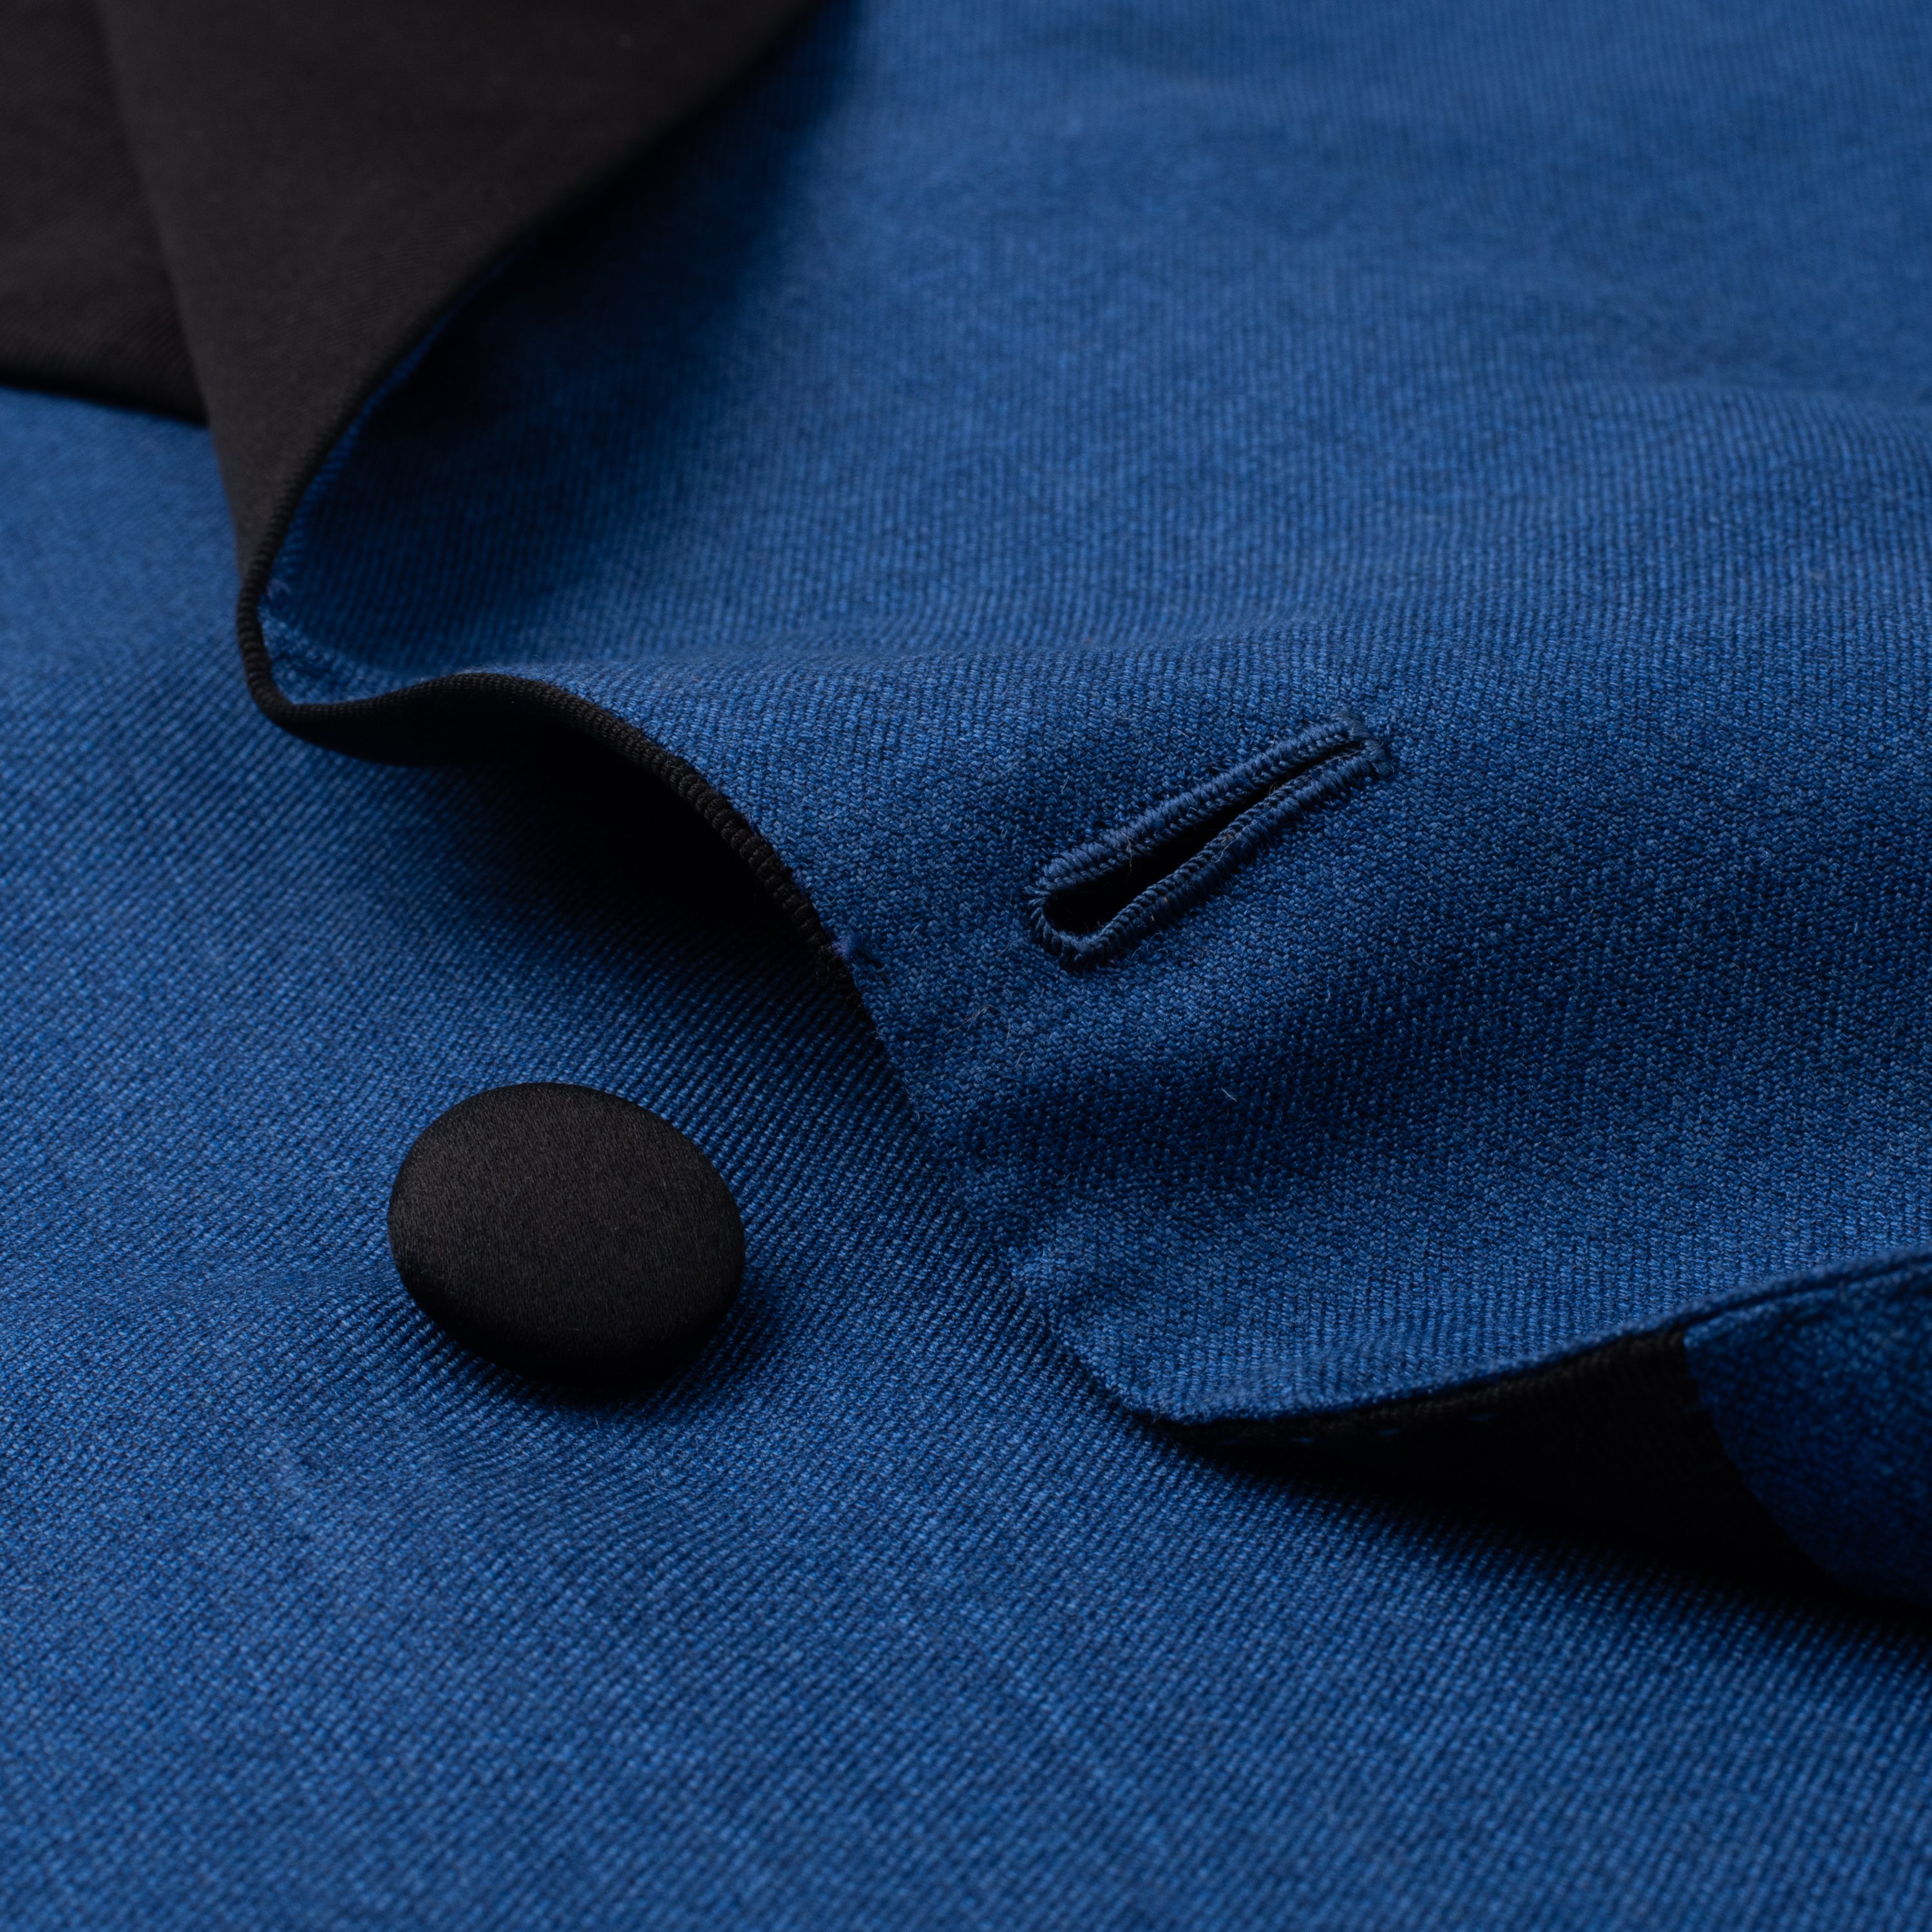 Sartoria CHIAIA Bespoke Handmade Blue Wool Super 150's DB Tuxedo Suit 52 NEW 42 SARTORIA CHIAIA